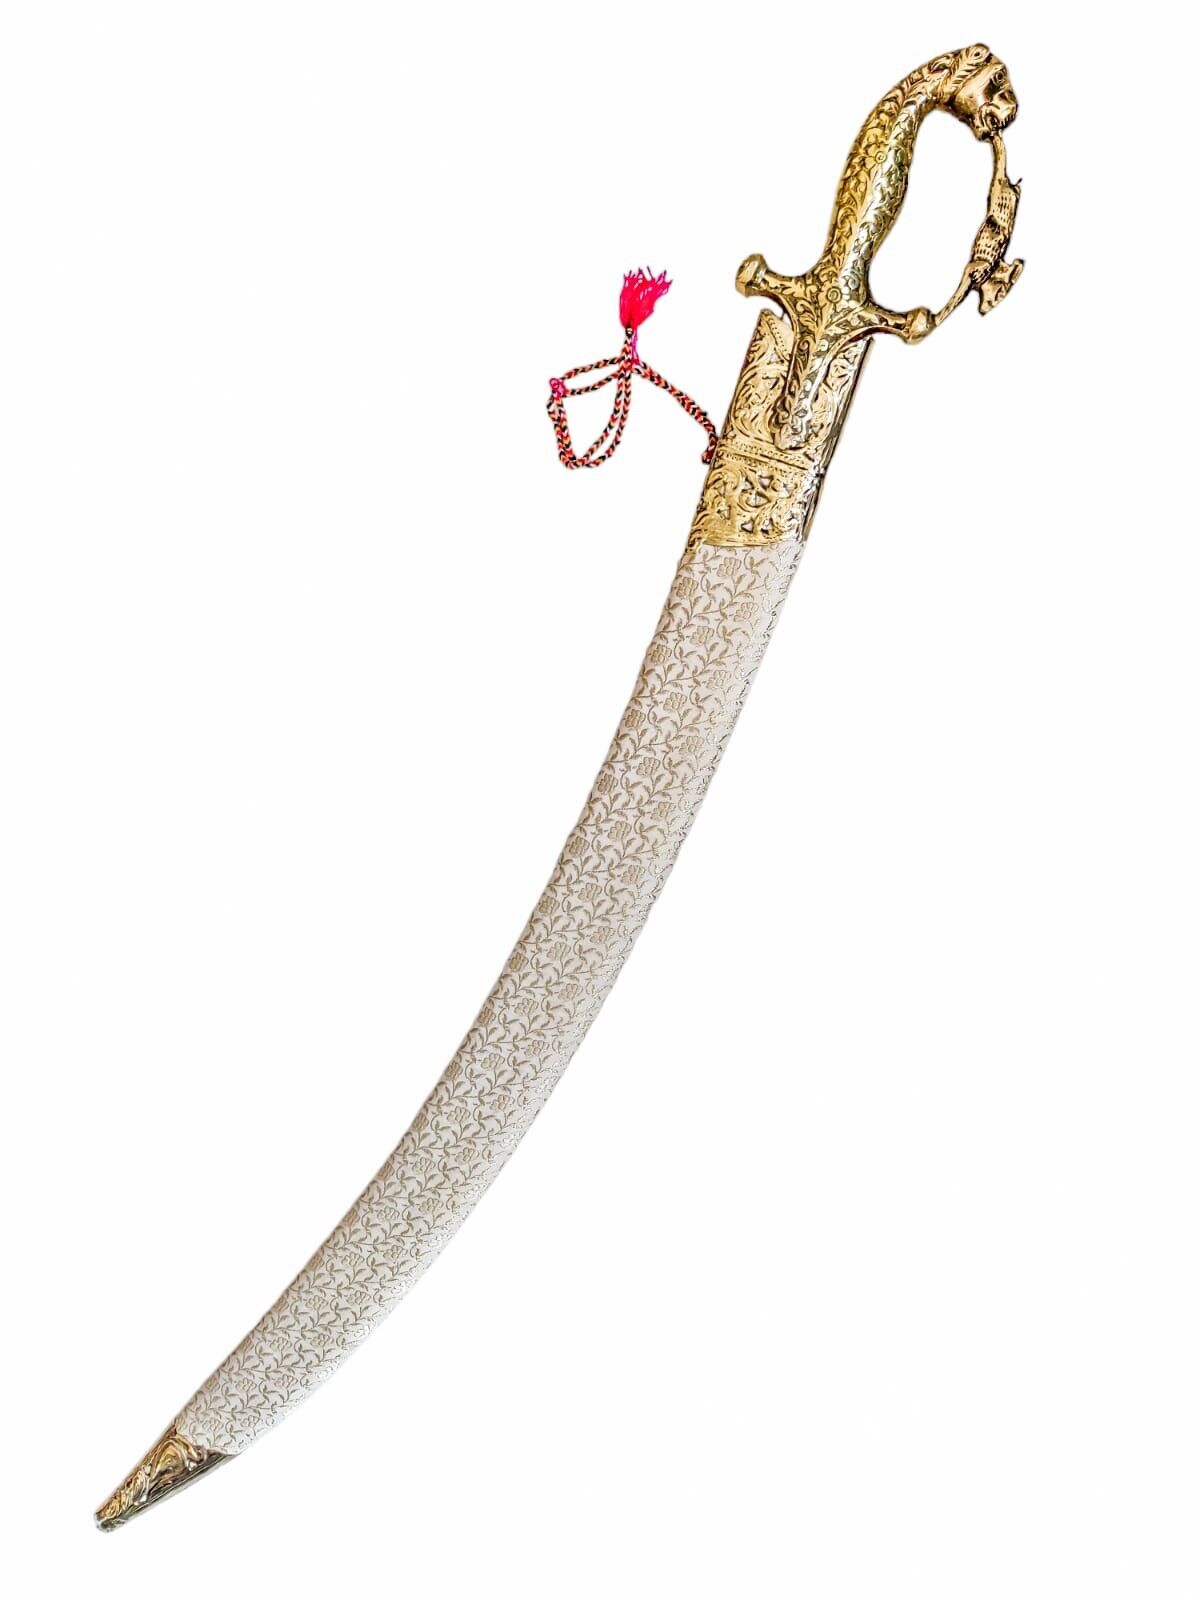 Newly Made Groom Wedding Sword   engraved carvings Hilt ivory Colour Sheath 34”